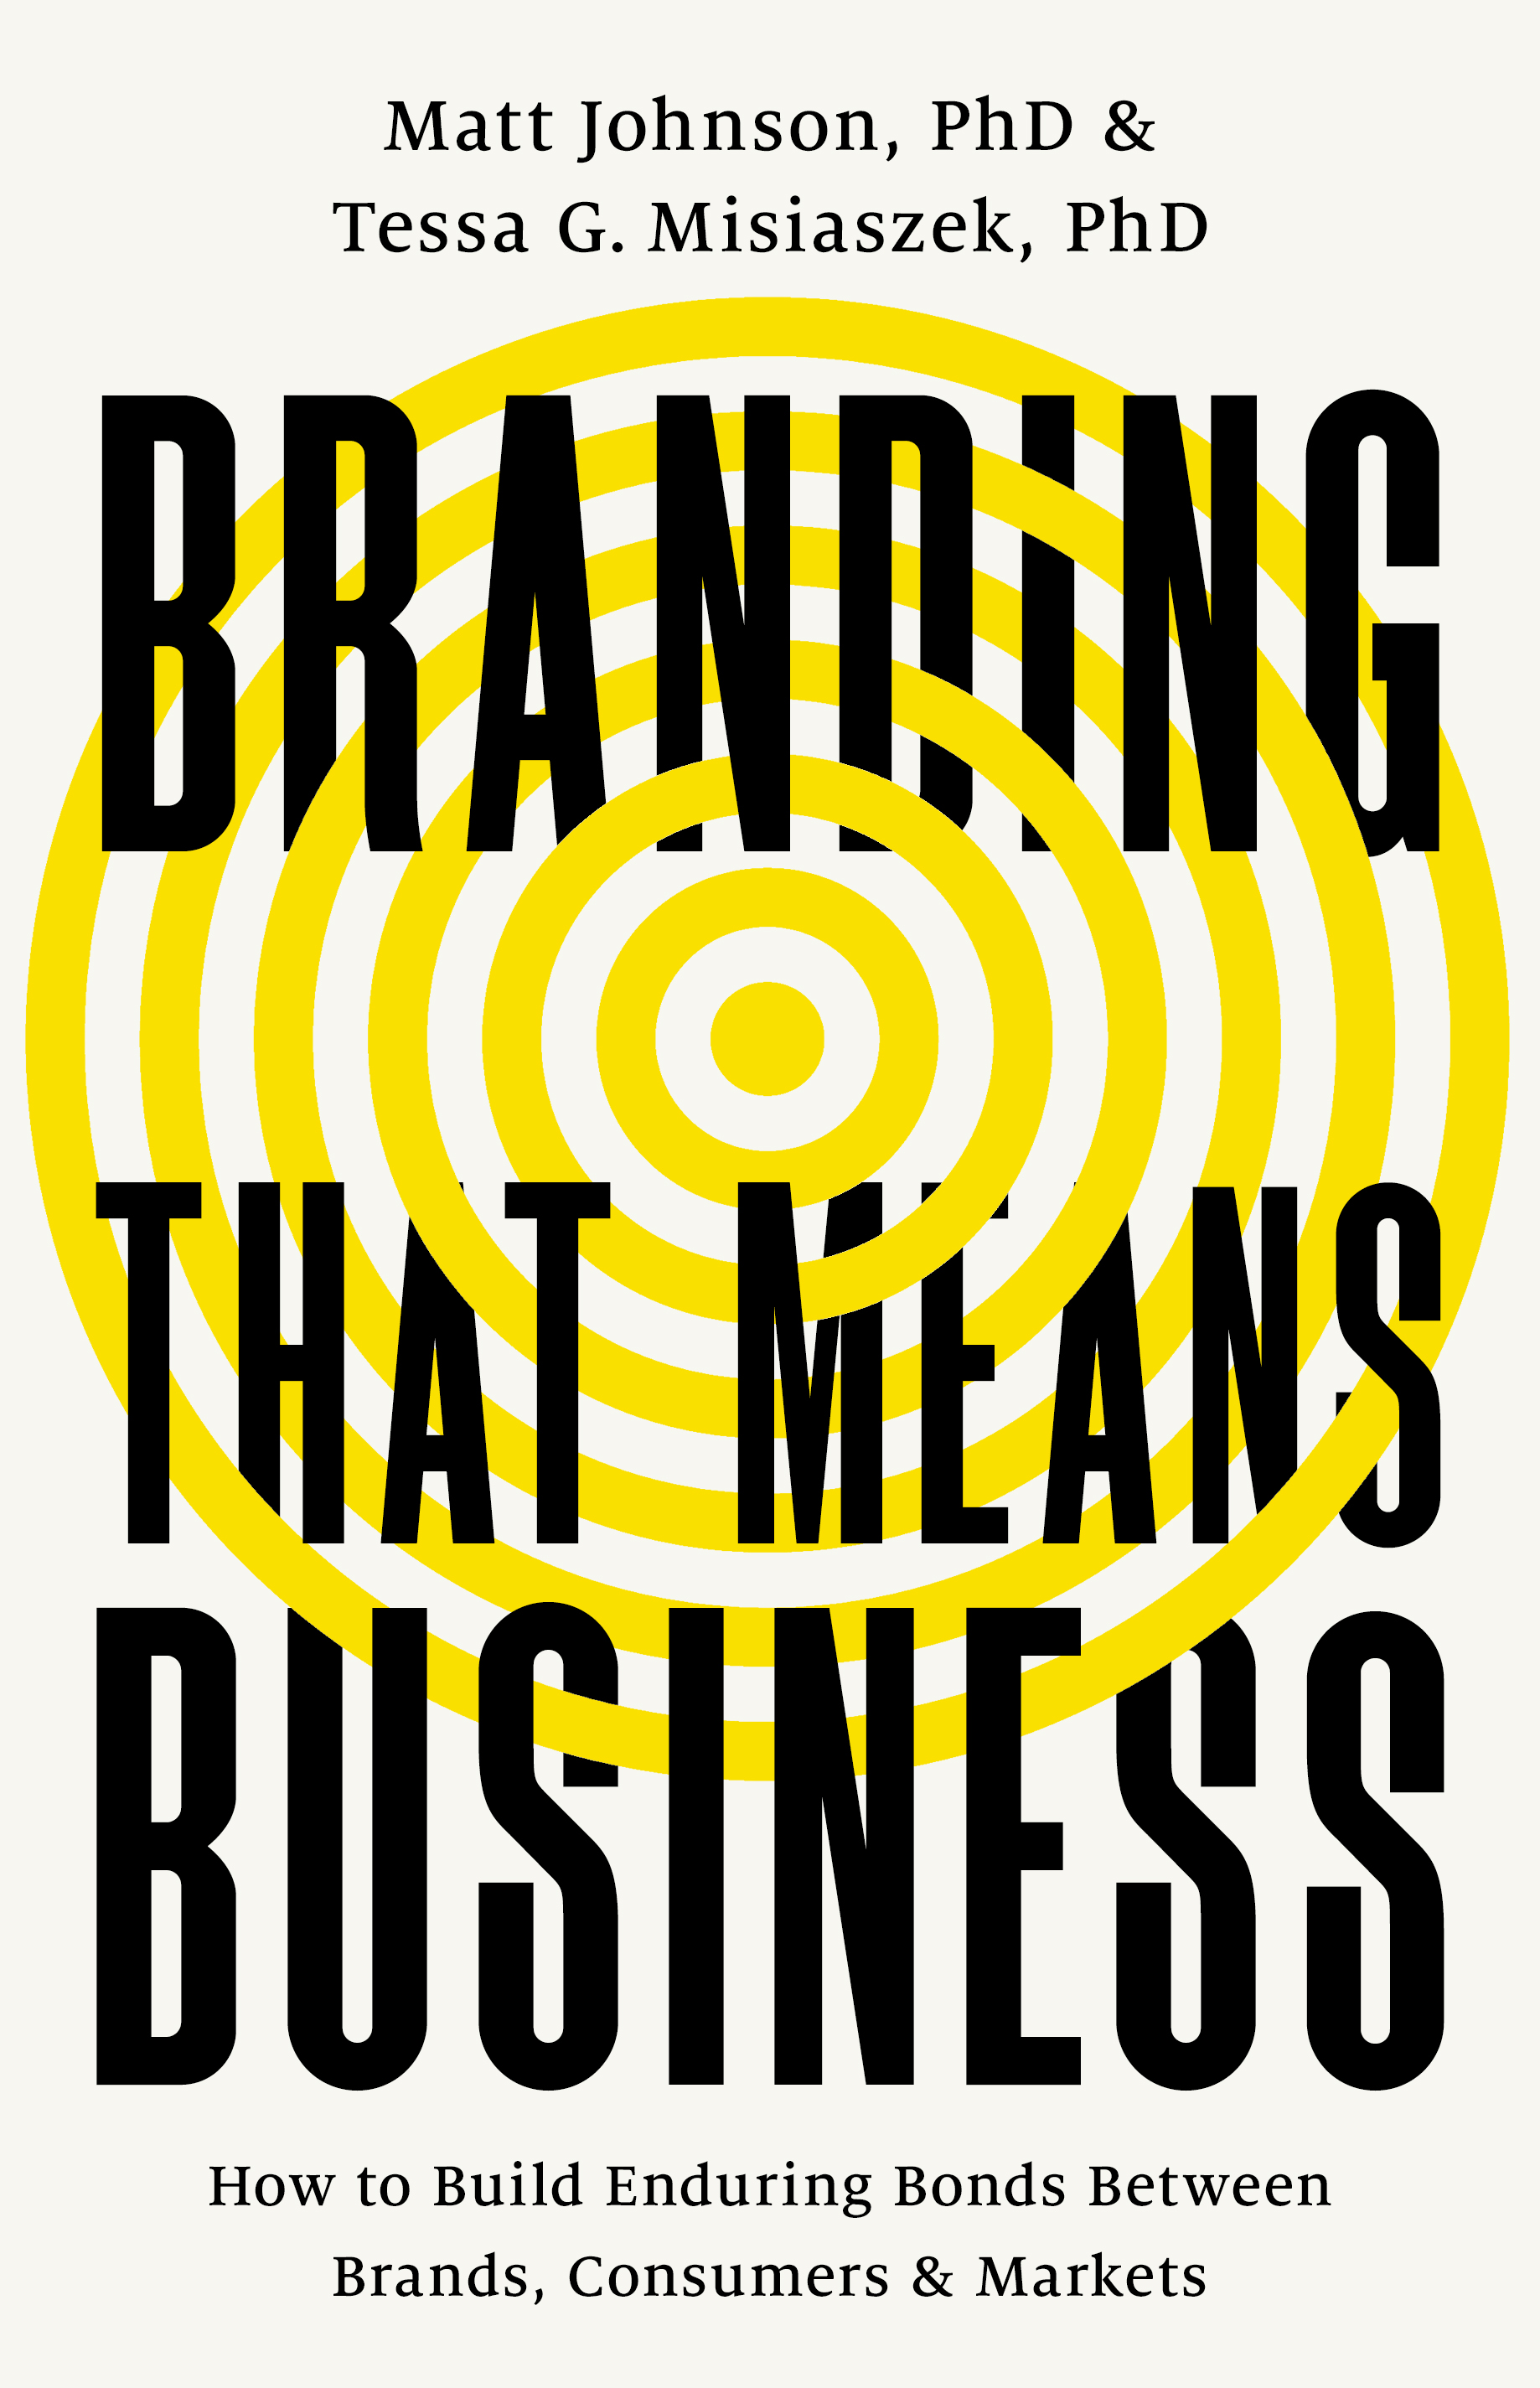 Matt　by　Group　Branding　Business　Johnson,　Book　that　Hachette　Means　PhD